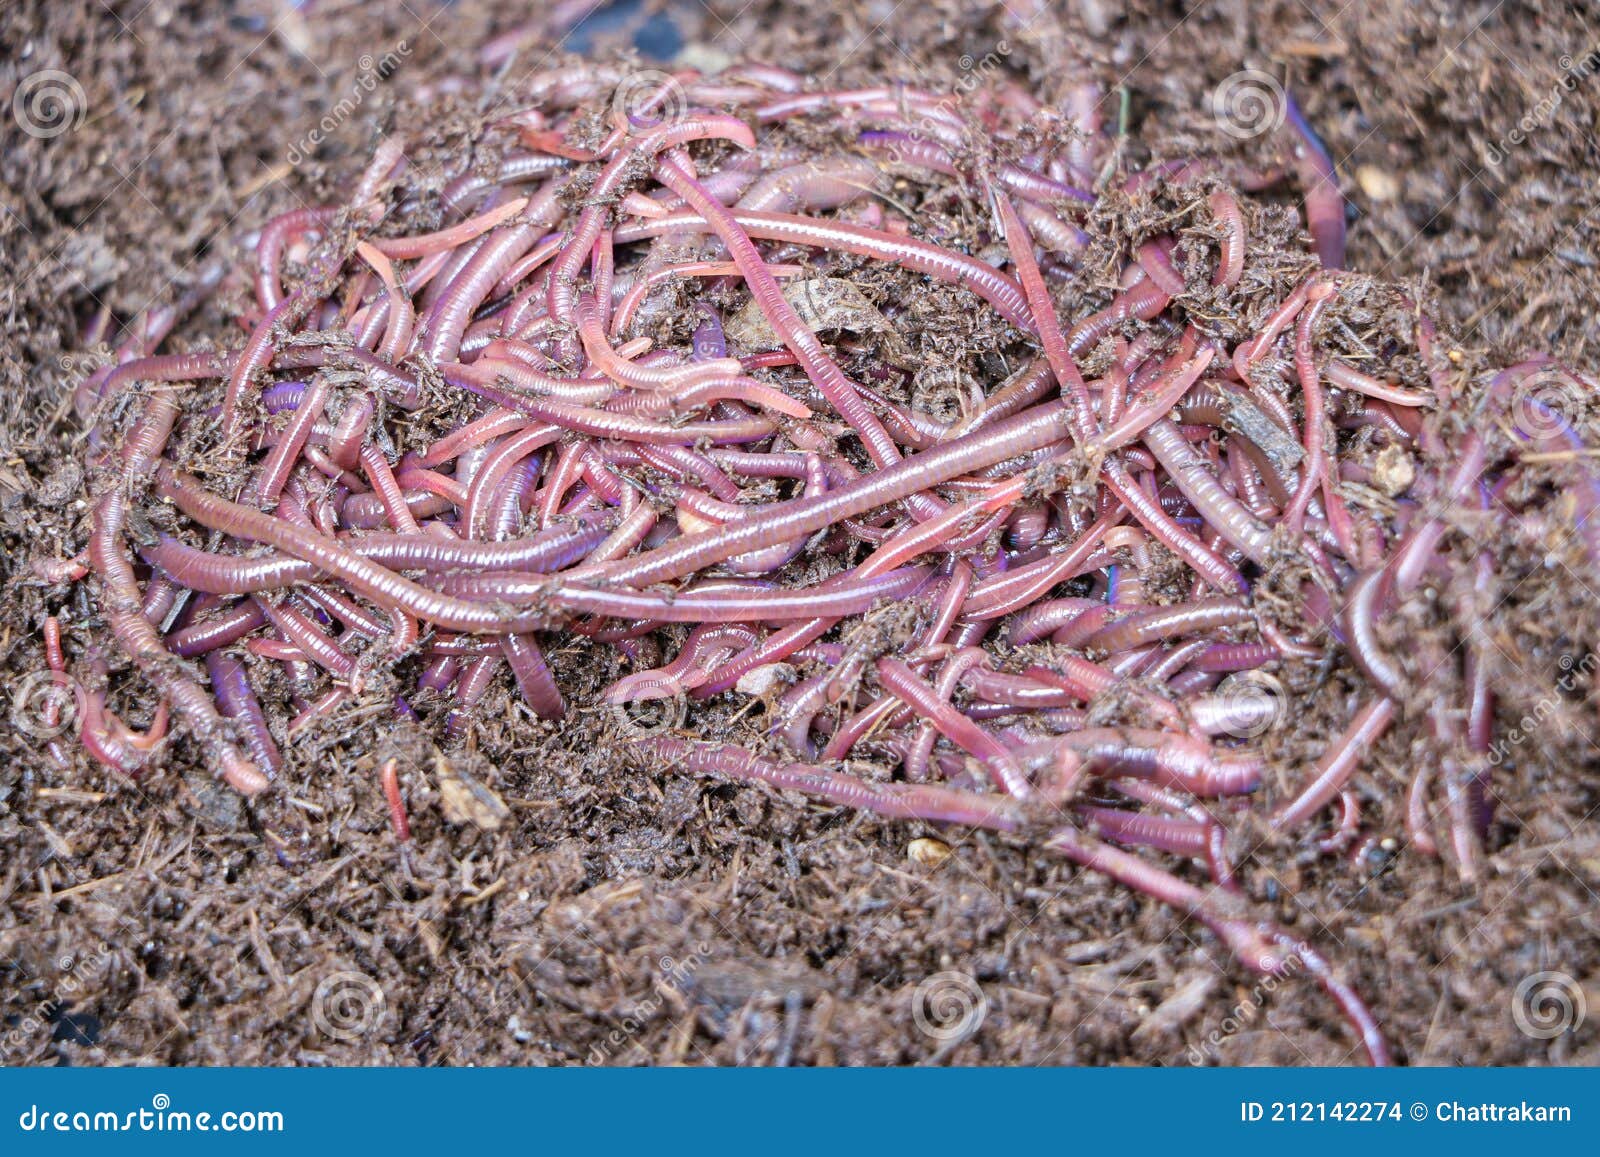 African Night Crawler Erthworms in Maure Stock Photo - Image of animal,  focus: 212142274